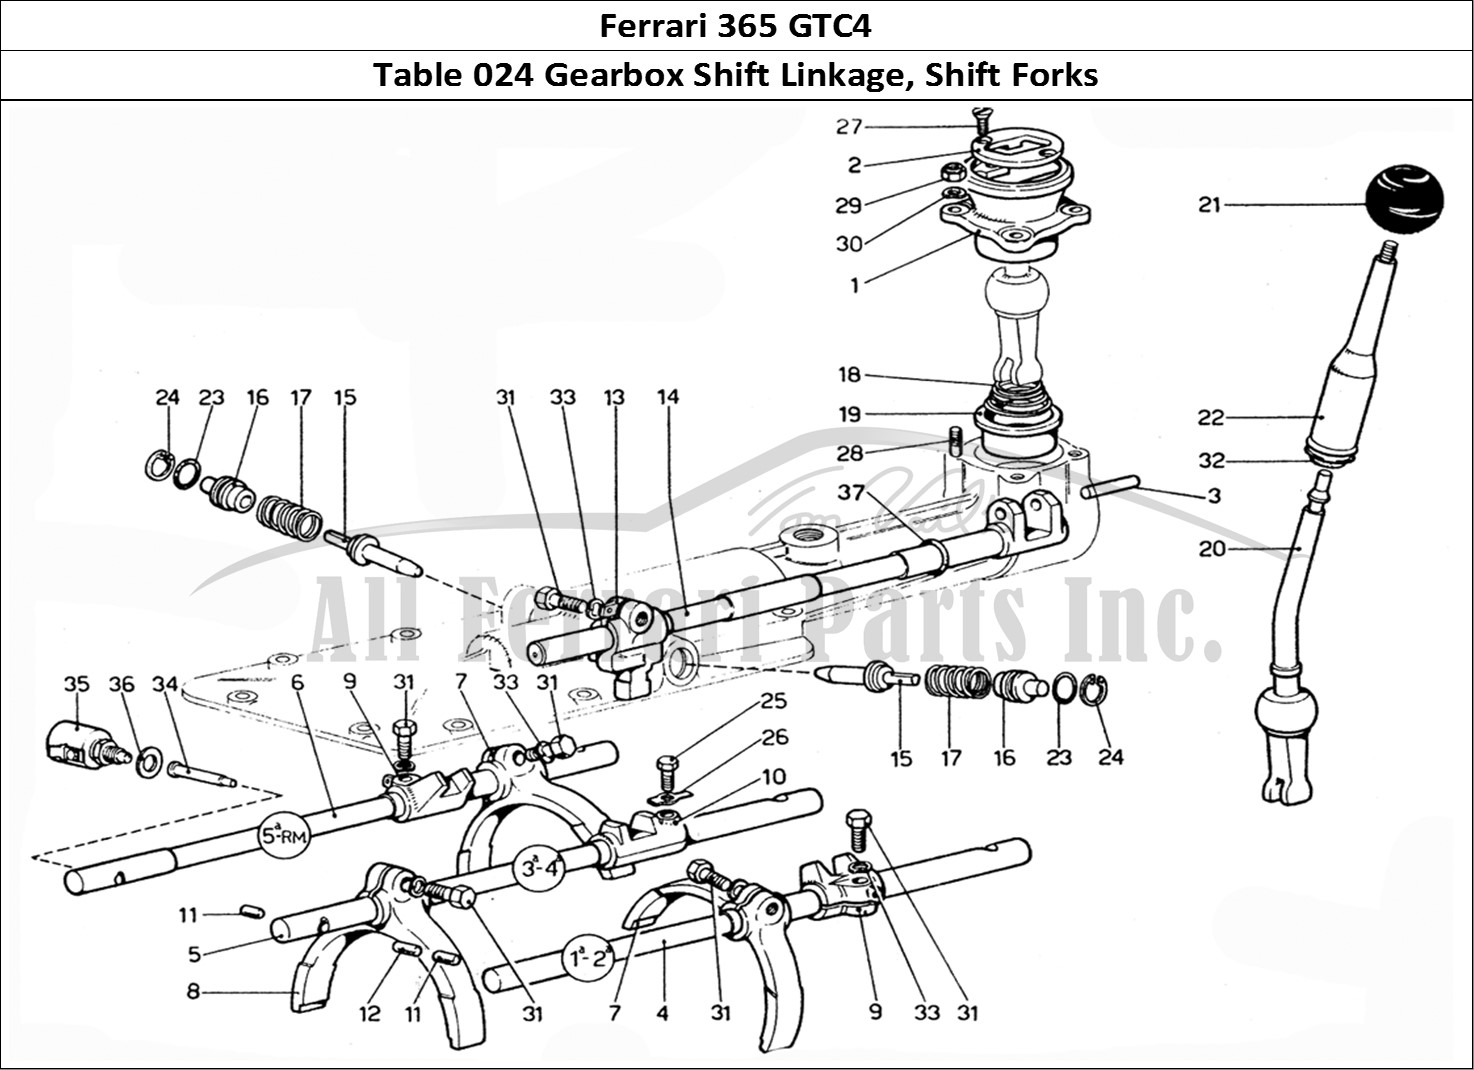 Ferrari Parts Ferrari 365 GTC4 (Mechanical) Page 024 Gear selector & Forks